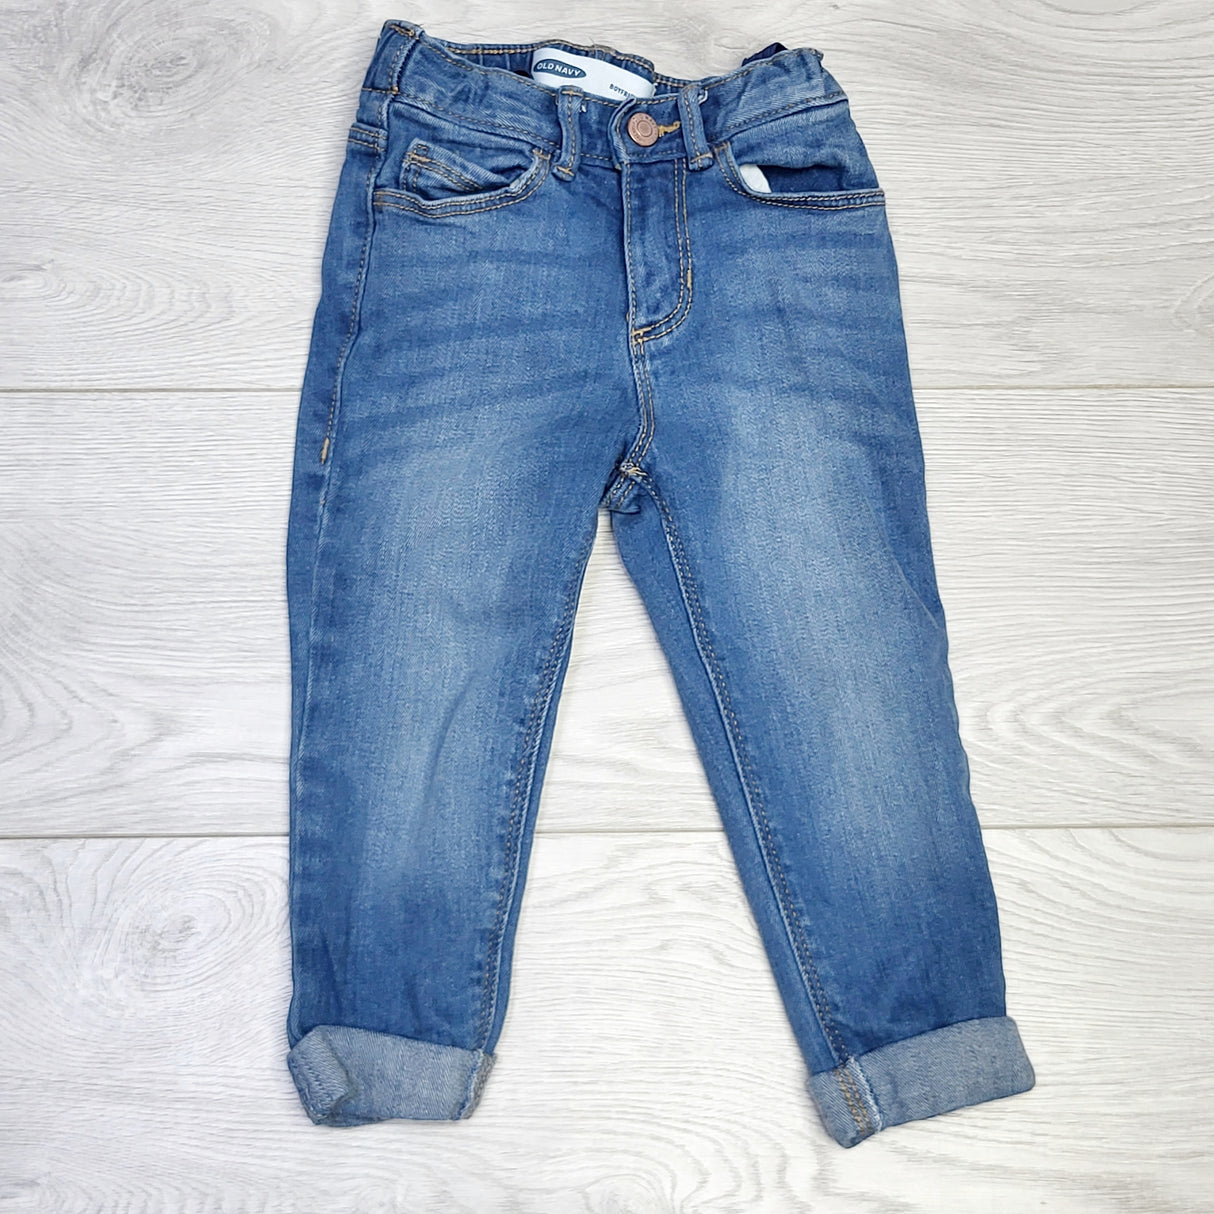 CRTH1 - Old Navy cuffed "Boyfriend" jeans. Size 2T